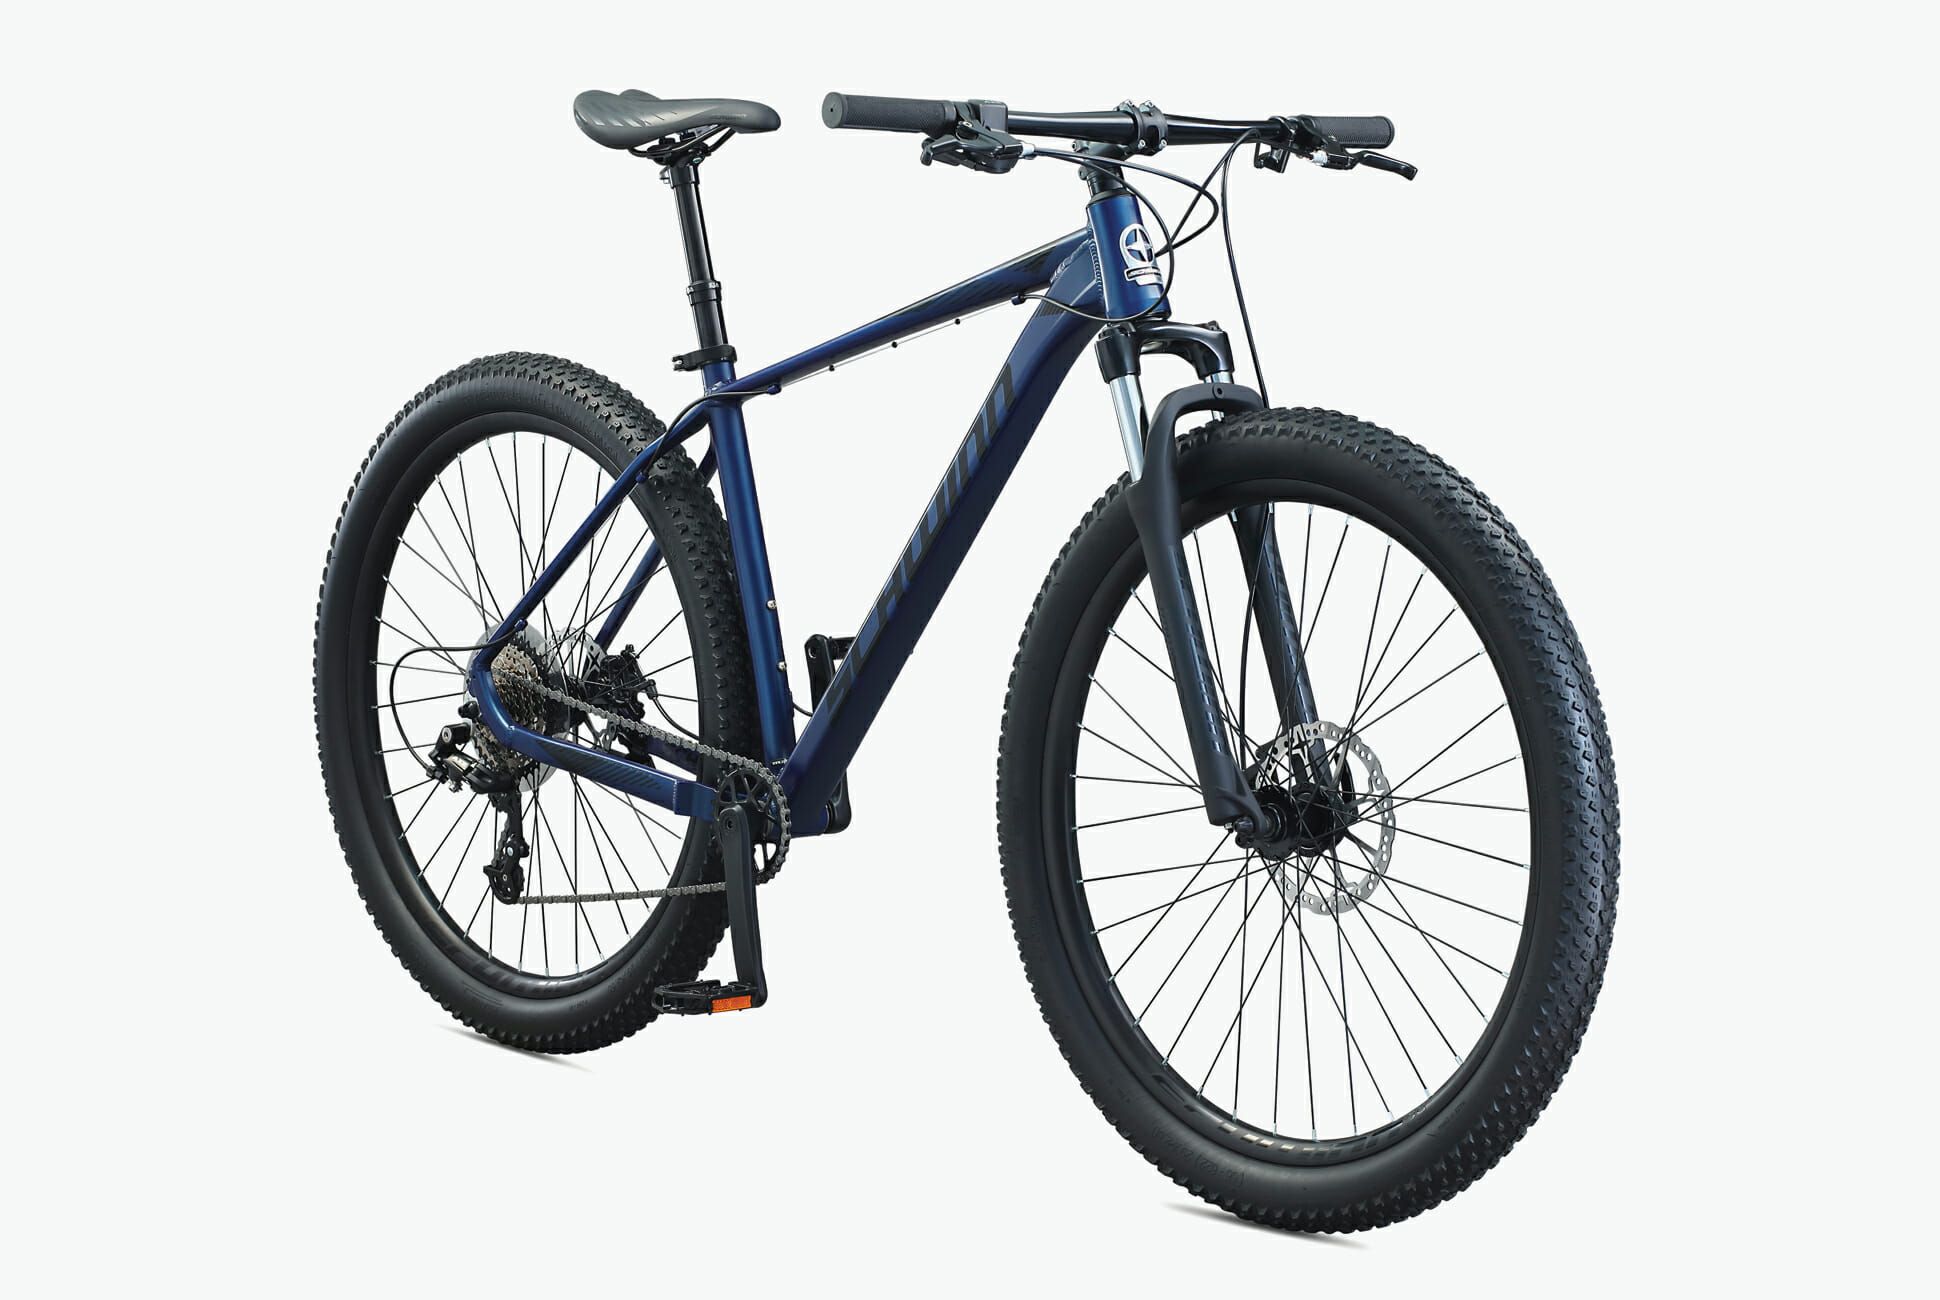 $400 mountain bike